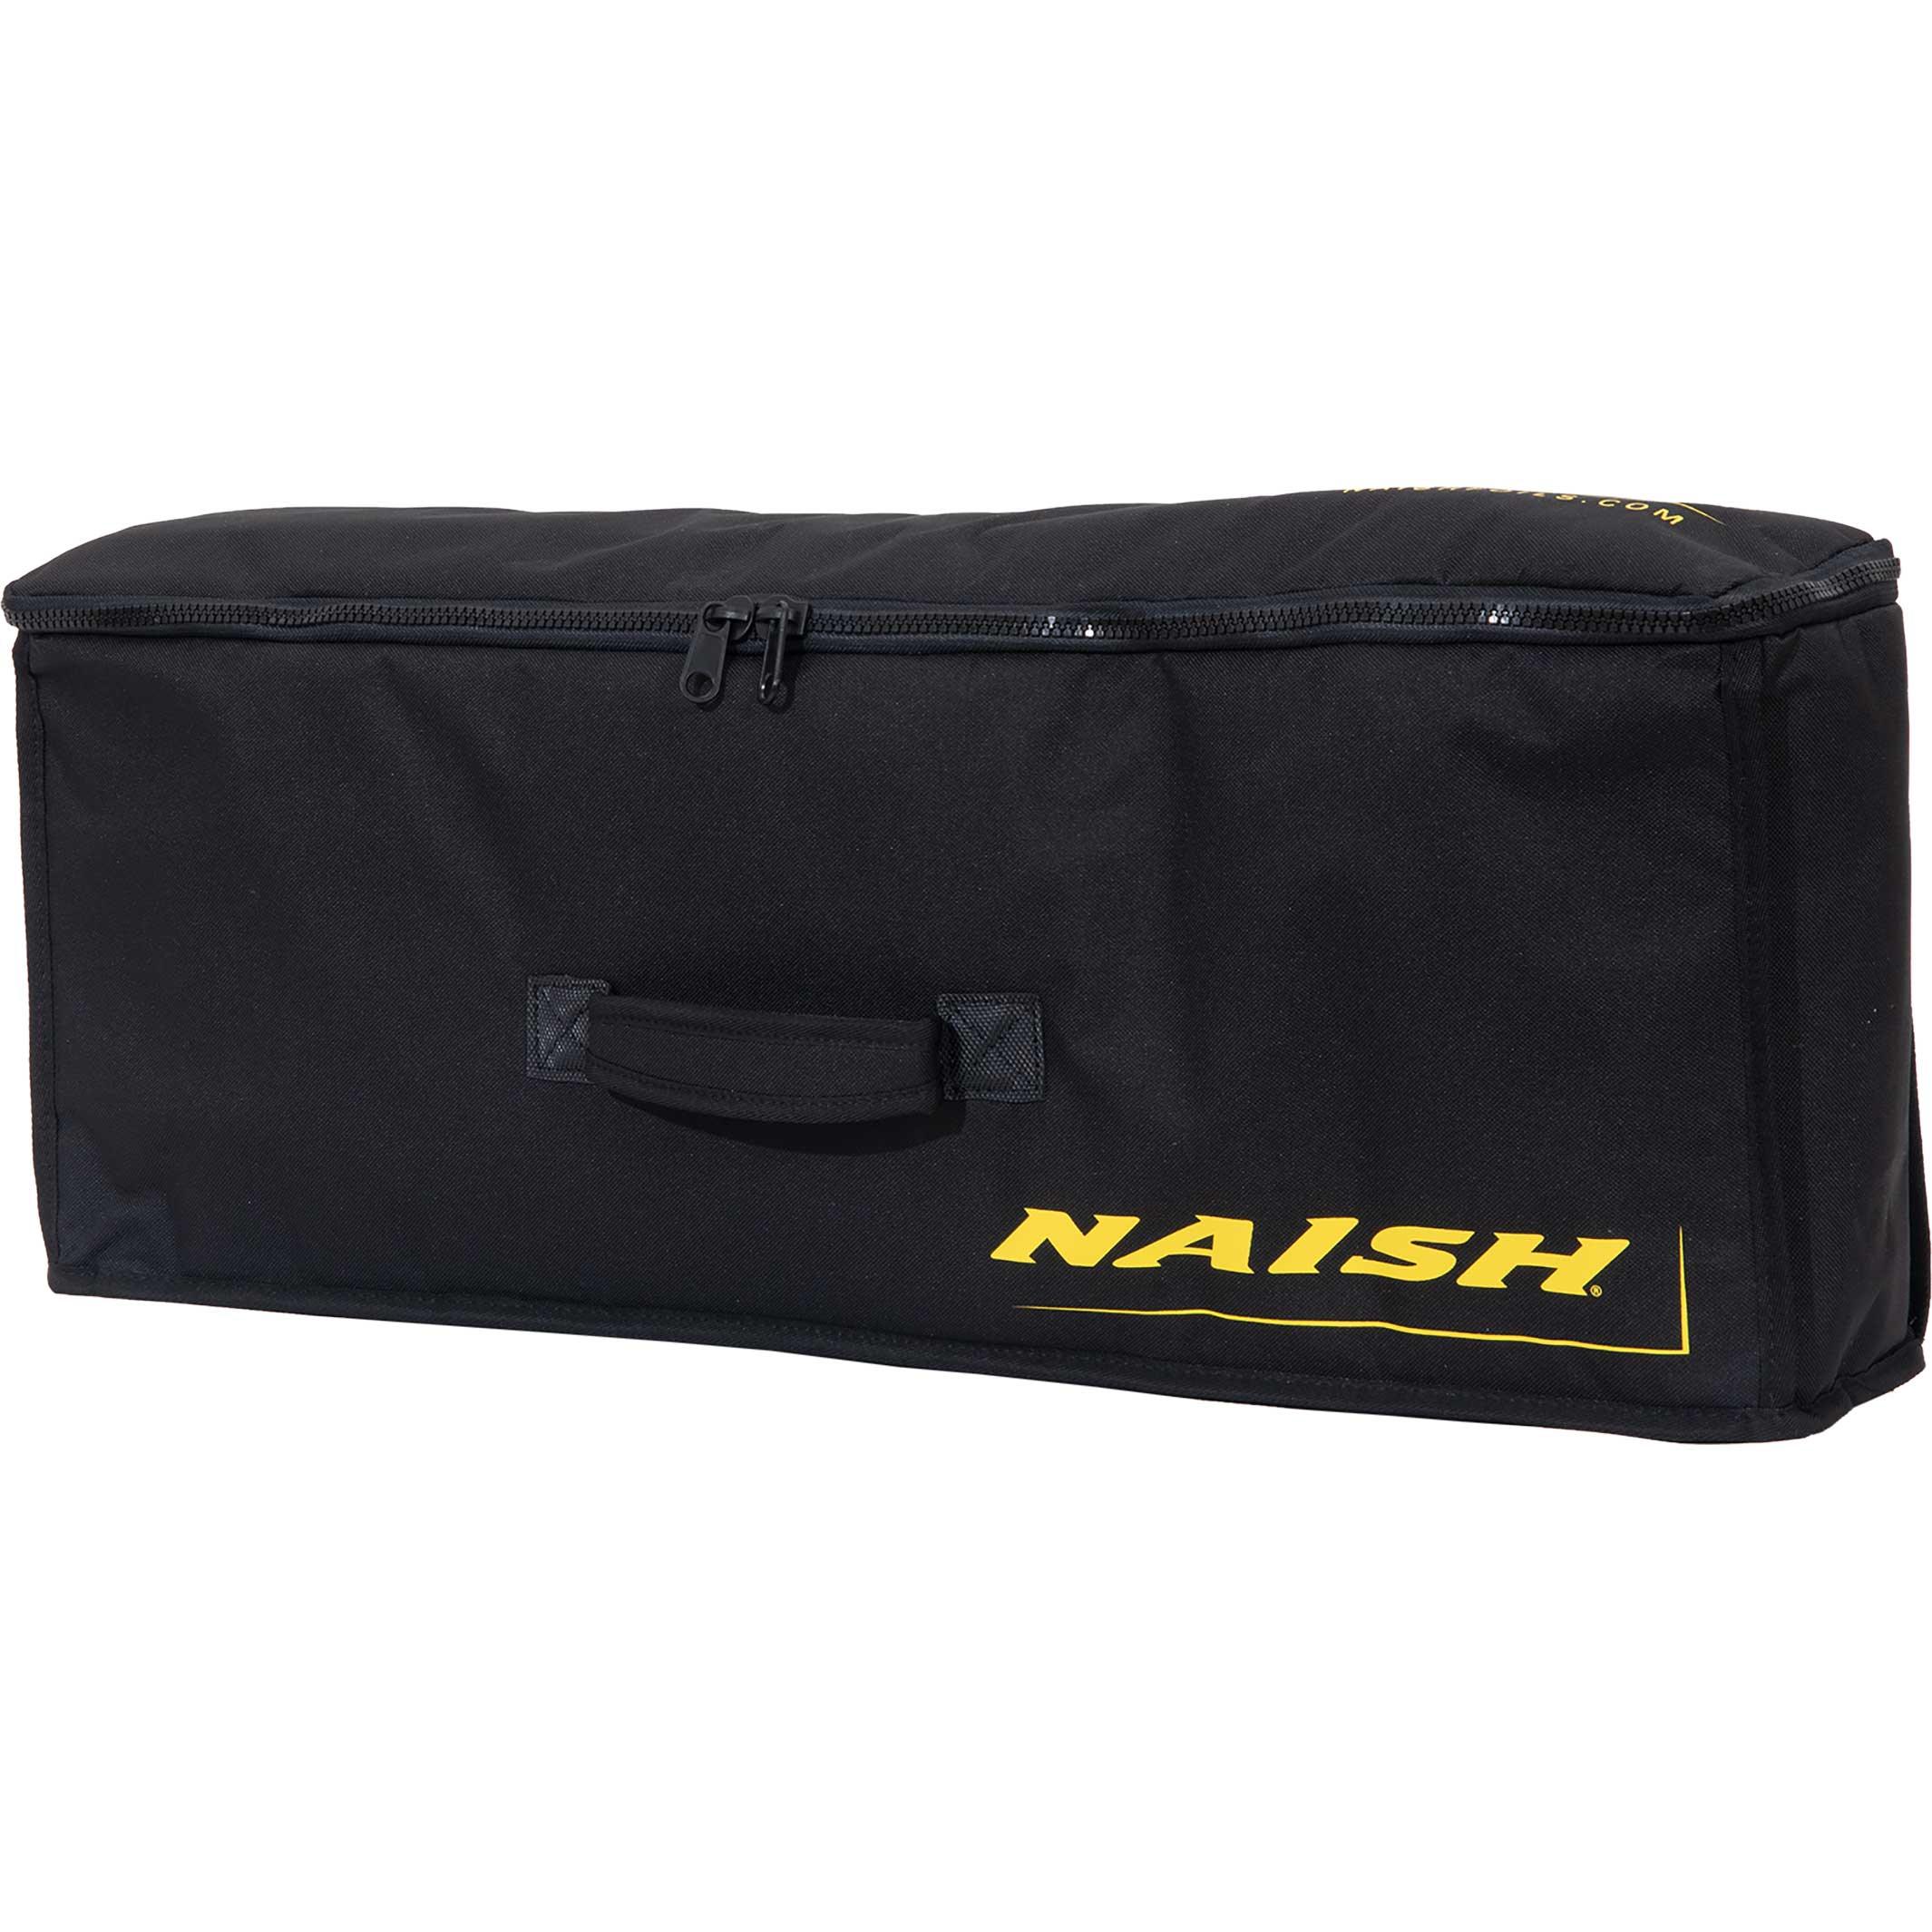 S26 Foil Case - Naish.com